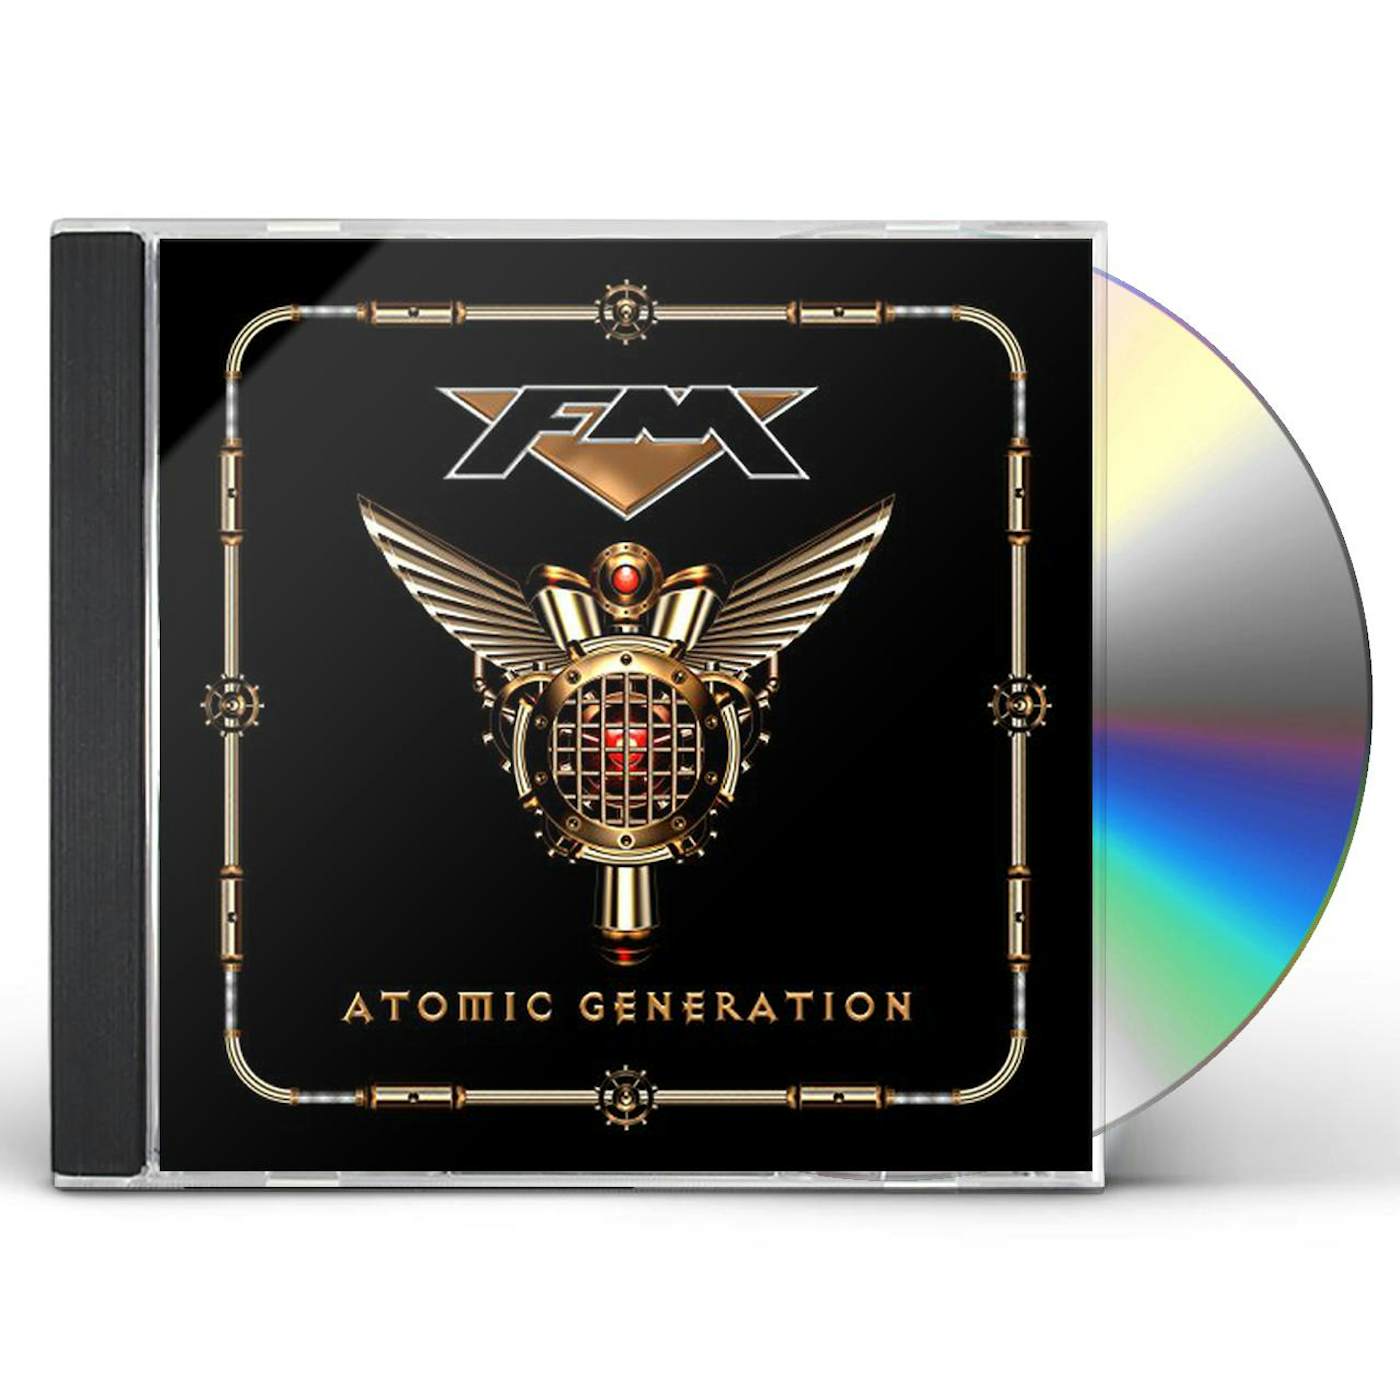 FM ATOMIC GENERATION CD